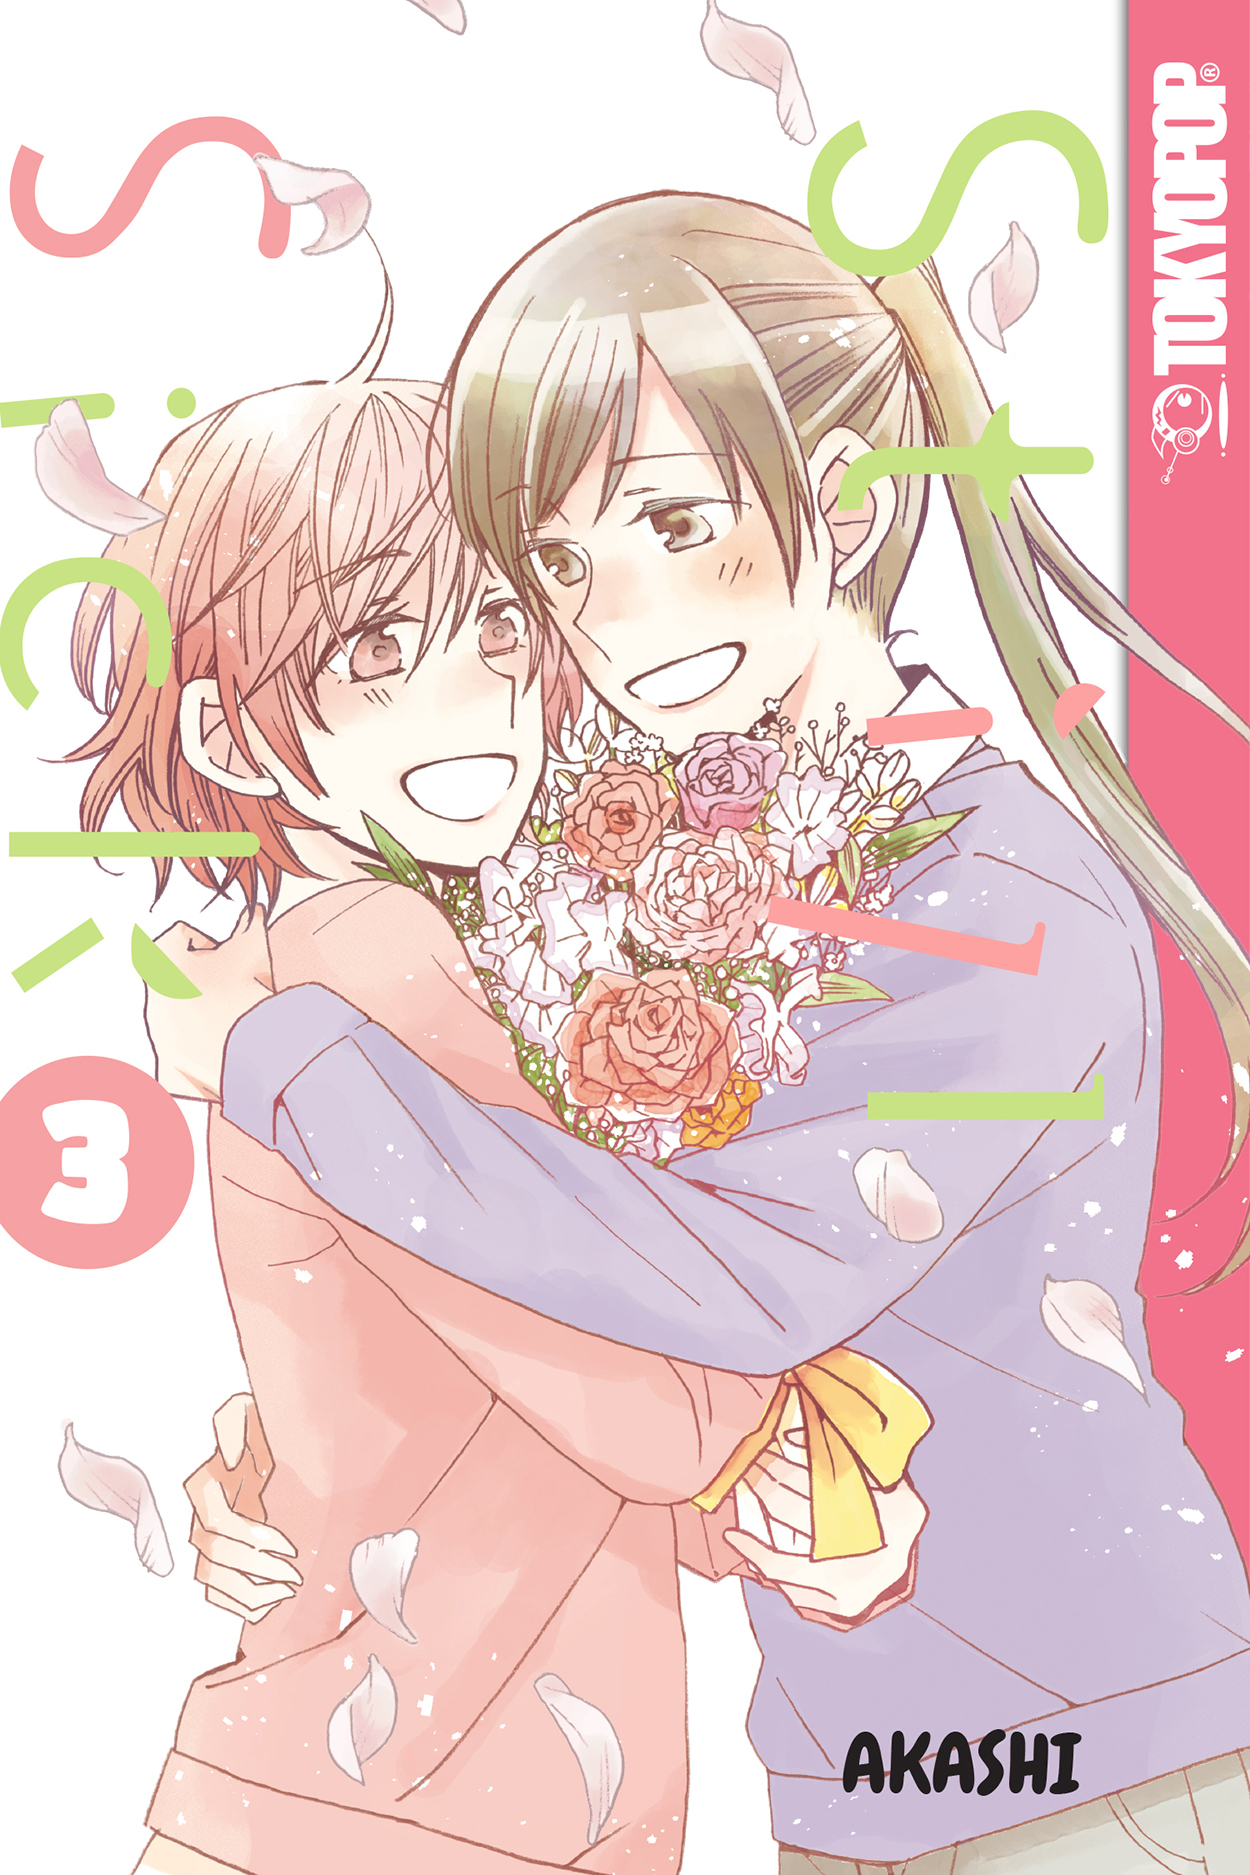 Still Sick Manga Manga Volume 3 (Of 3)